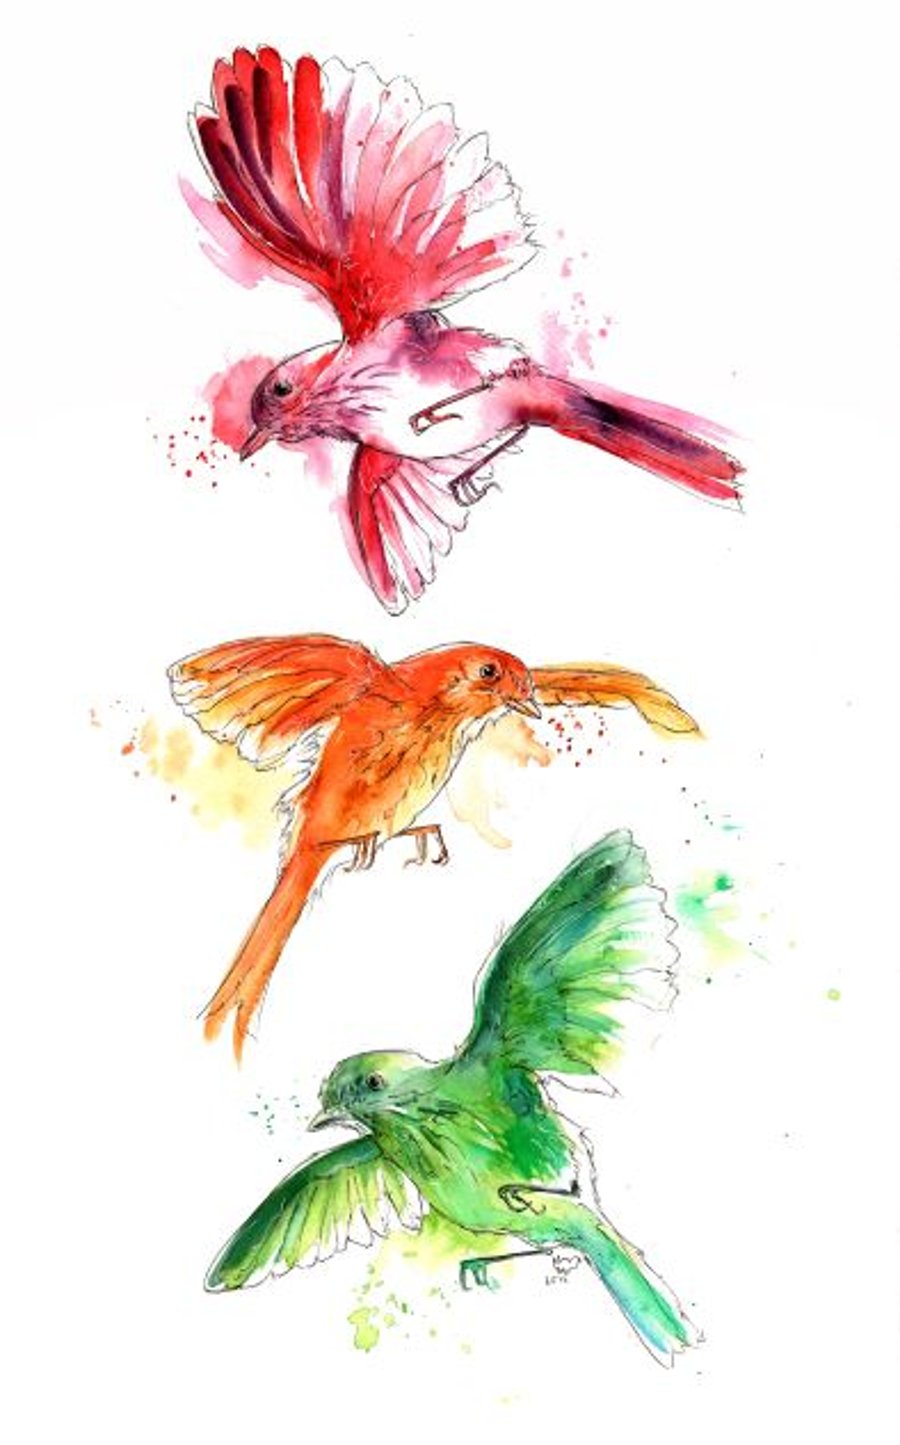 'Three Little Birds' A5 Print